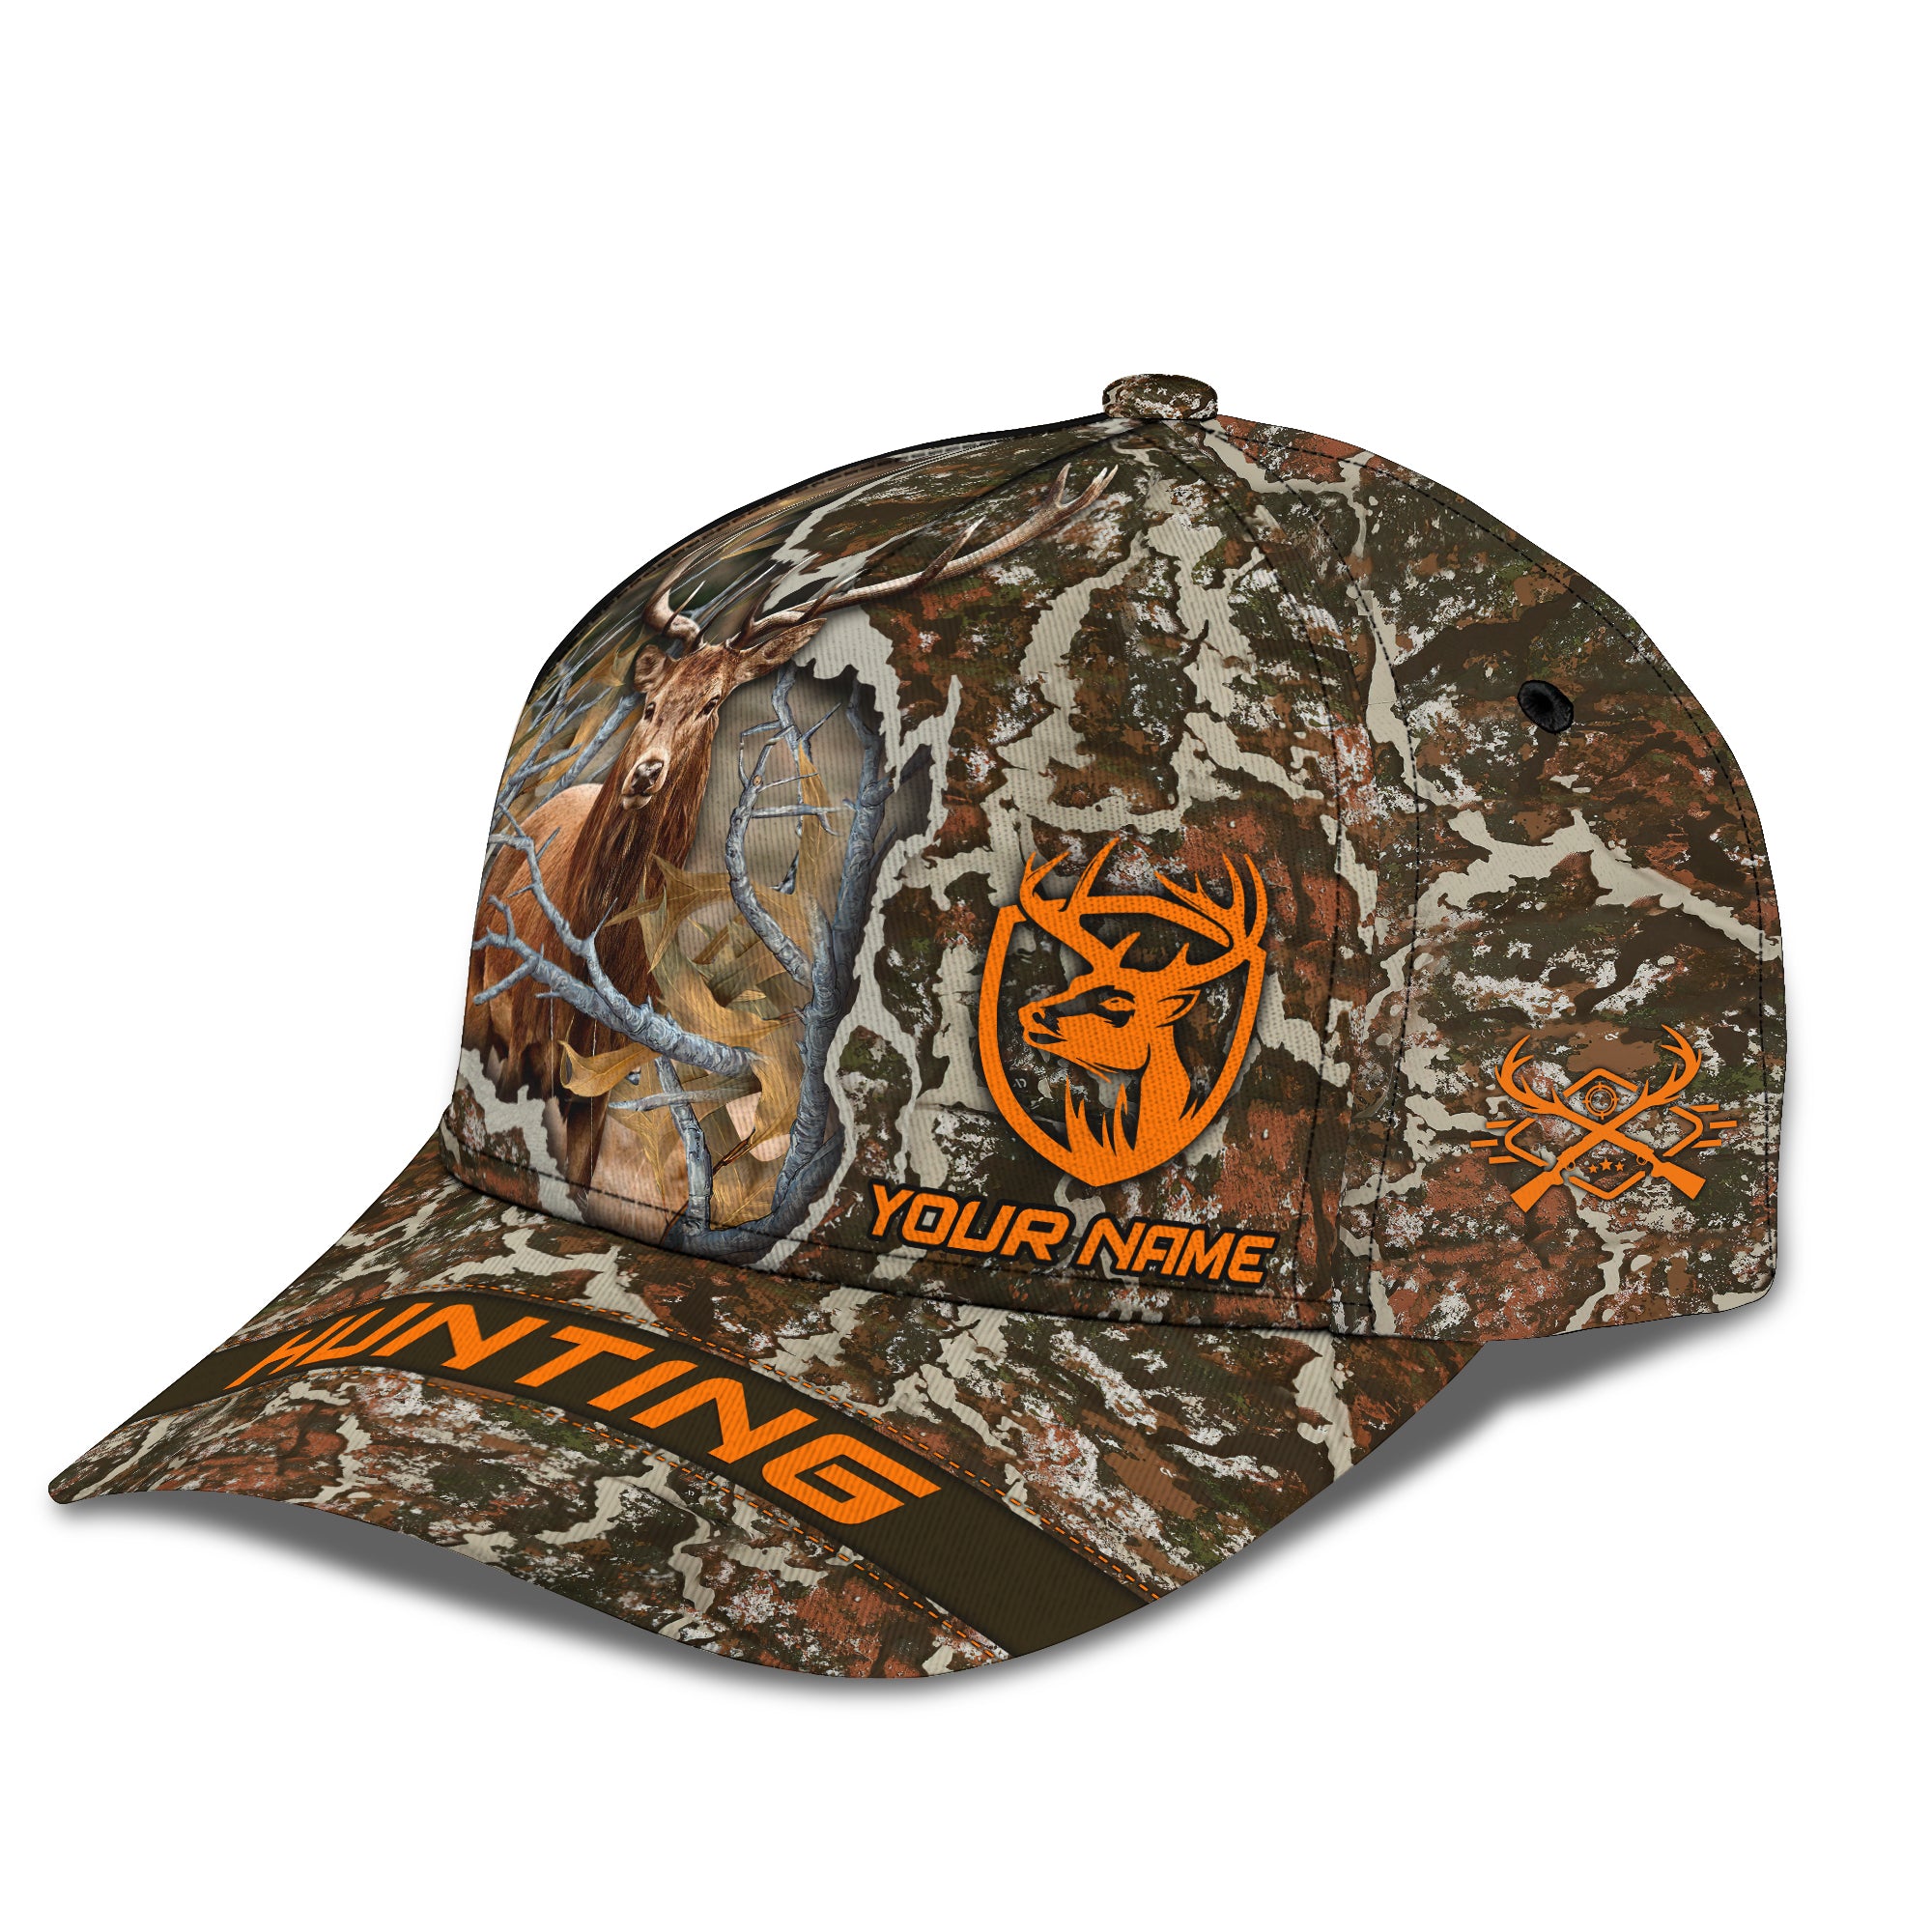 Hunting Personalized Name 3D Hat Deer Hunter Classic Cap